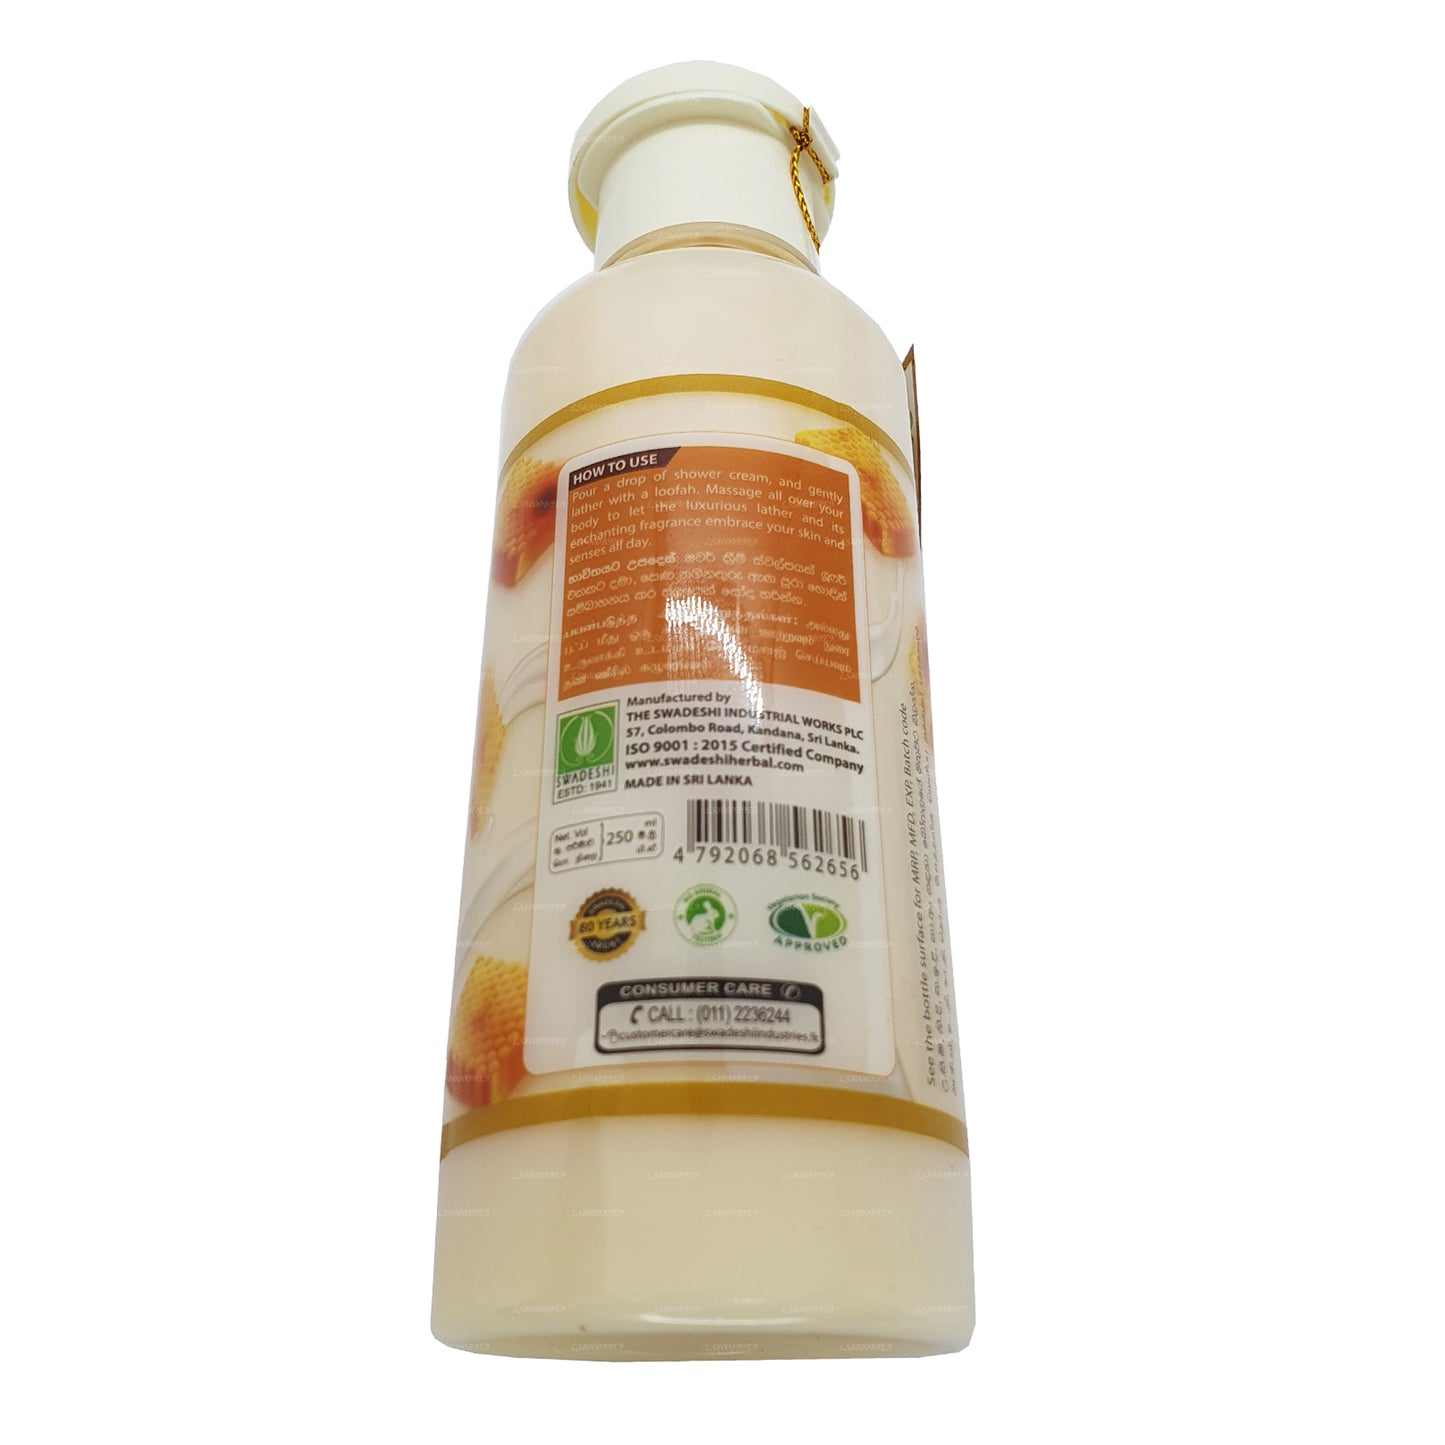 Swadeshi Rani sandalwood douchecrème met melk, honing en kurkuma (250 ml)